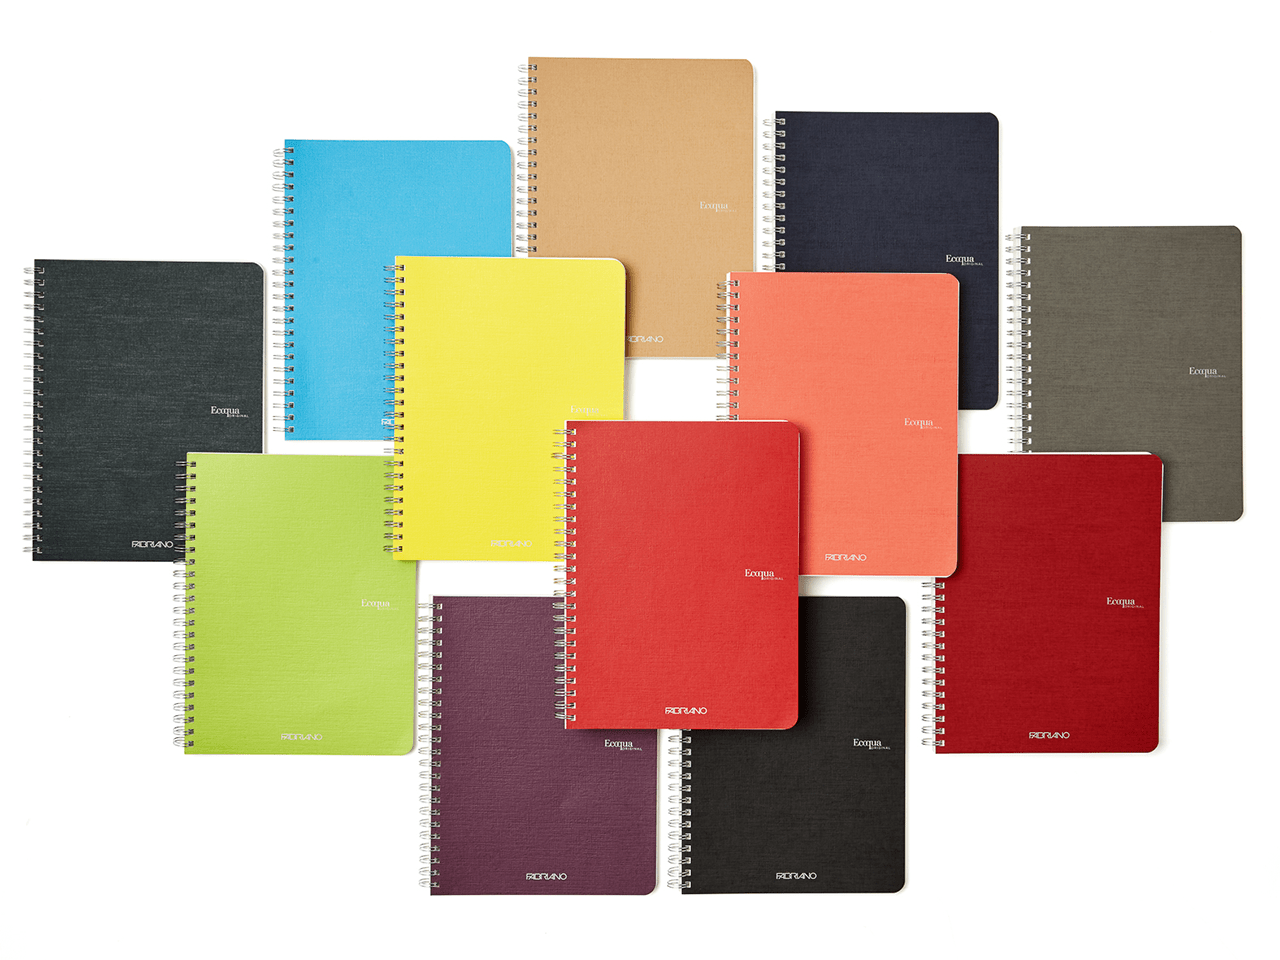 Ecoqua Original, notebook, staple/spiral bound, ivory paper